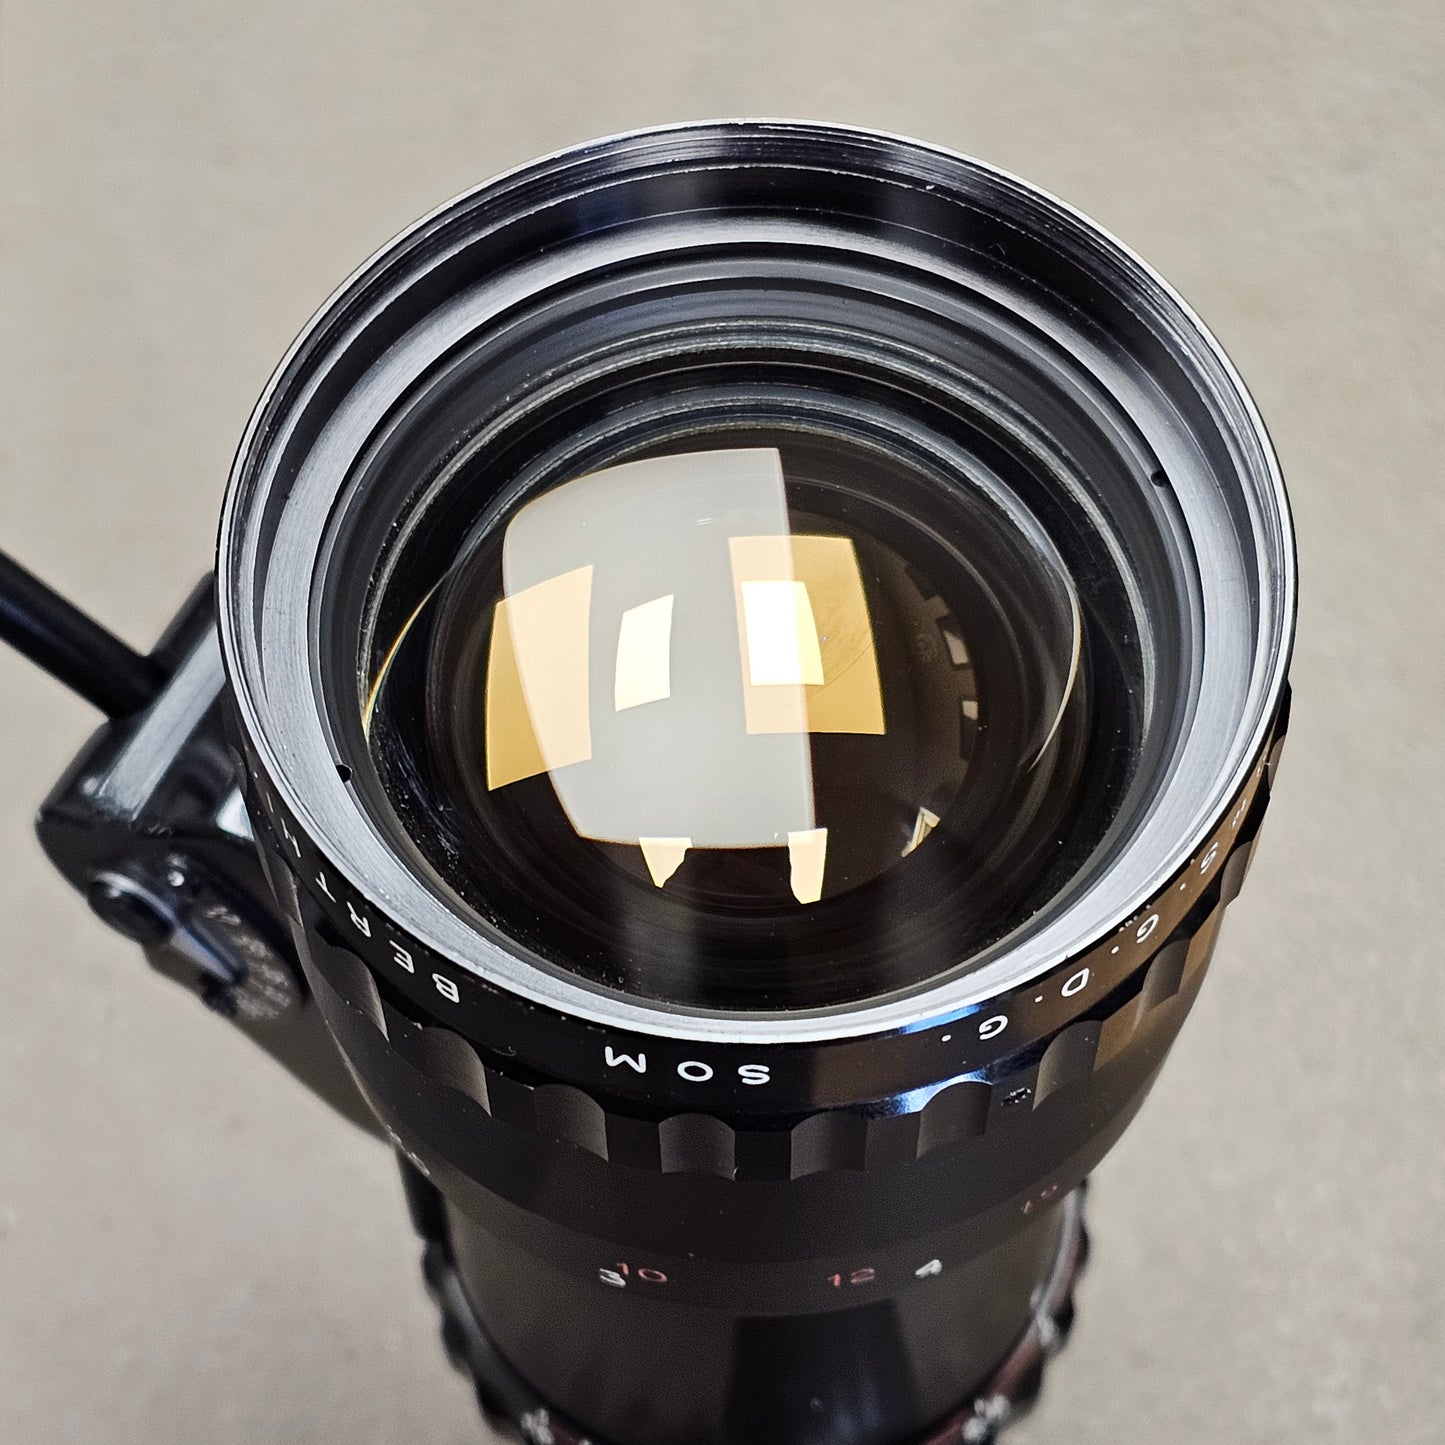 Som Berthiot Pan Cinor 17-85mm T2.66 C-Mount Zoom lens with Dogleg Viewfinder S# CC 7369